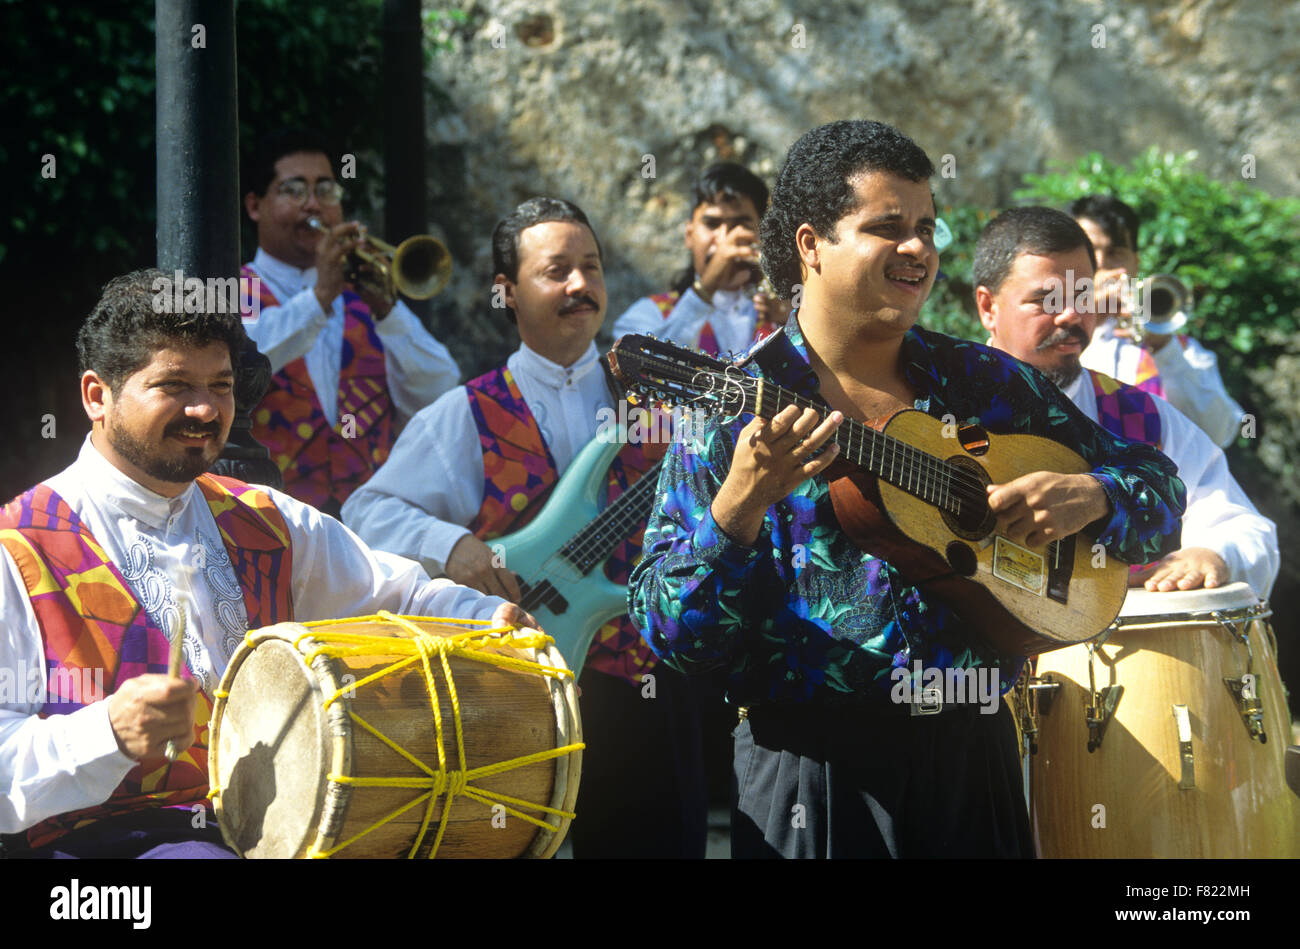 Festival entertainers, Old San Juan, Puerto Rico, Caribbean. Stock Photo